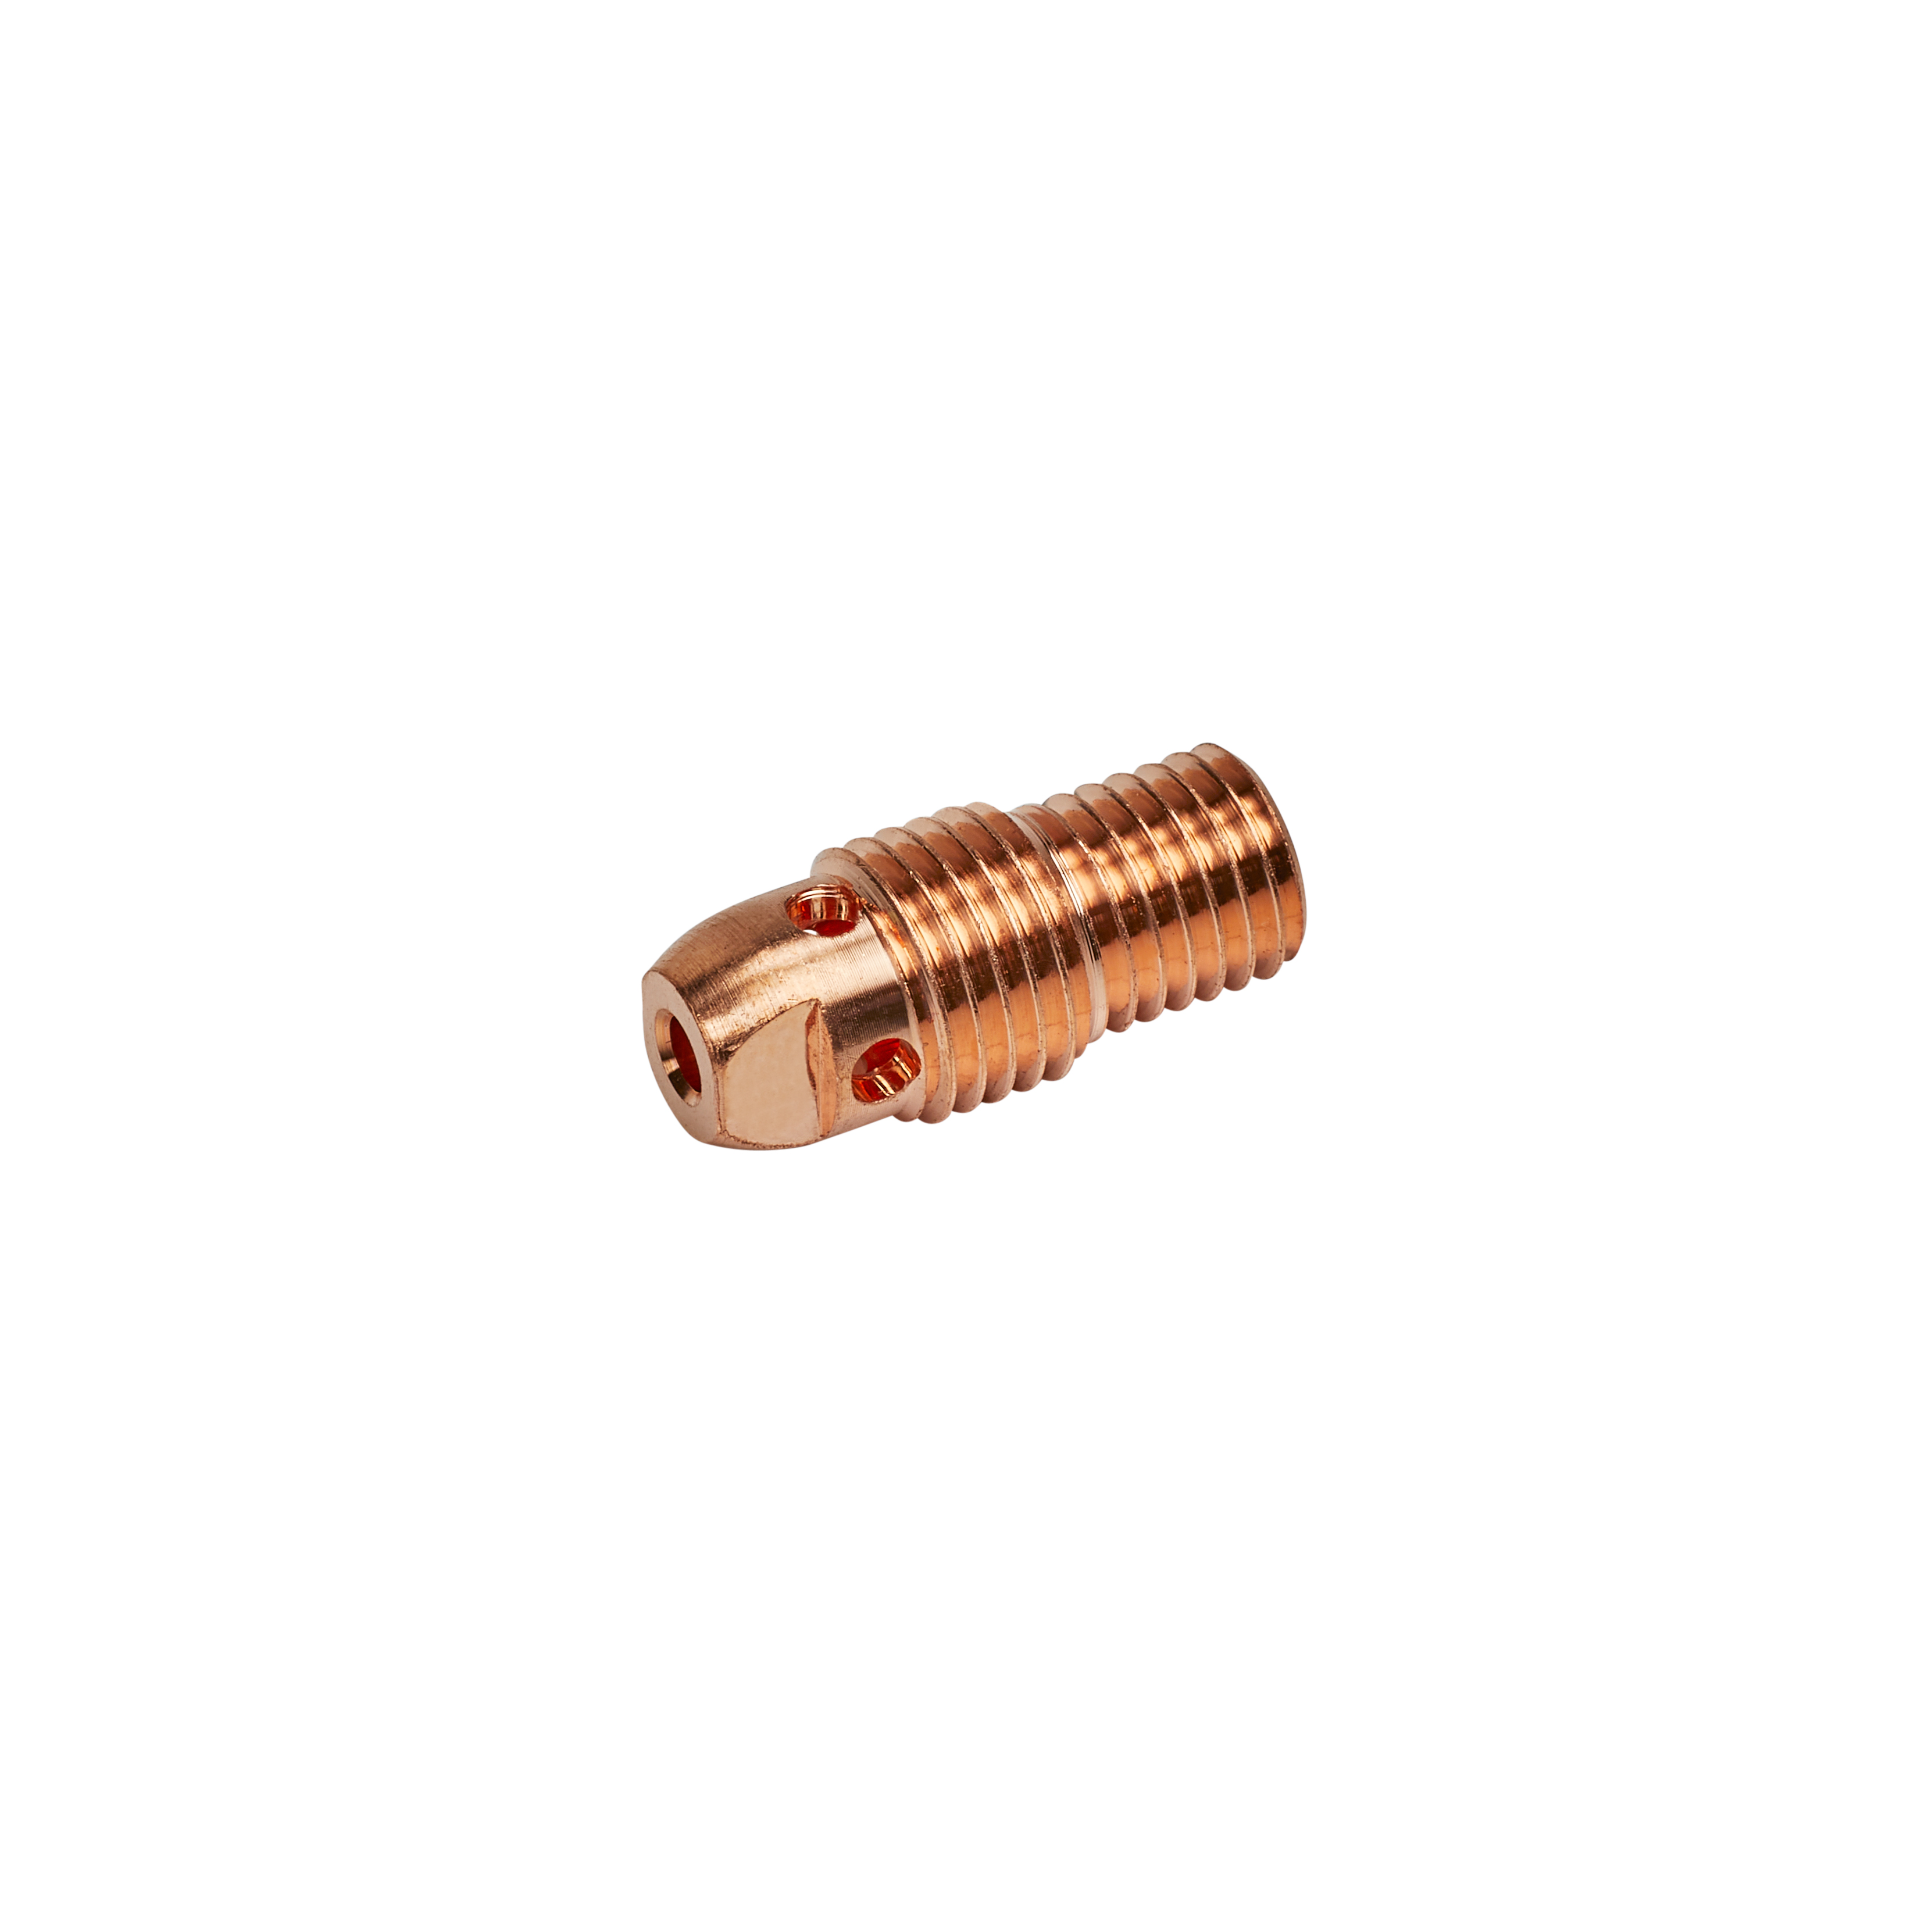 Weldmark by CK Worldwide 13N28 Copper Collet Body 3/32 (0.094) Max Electrode Diameter